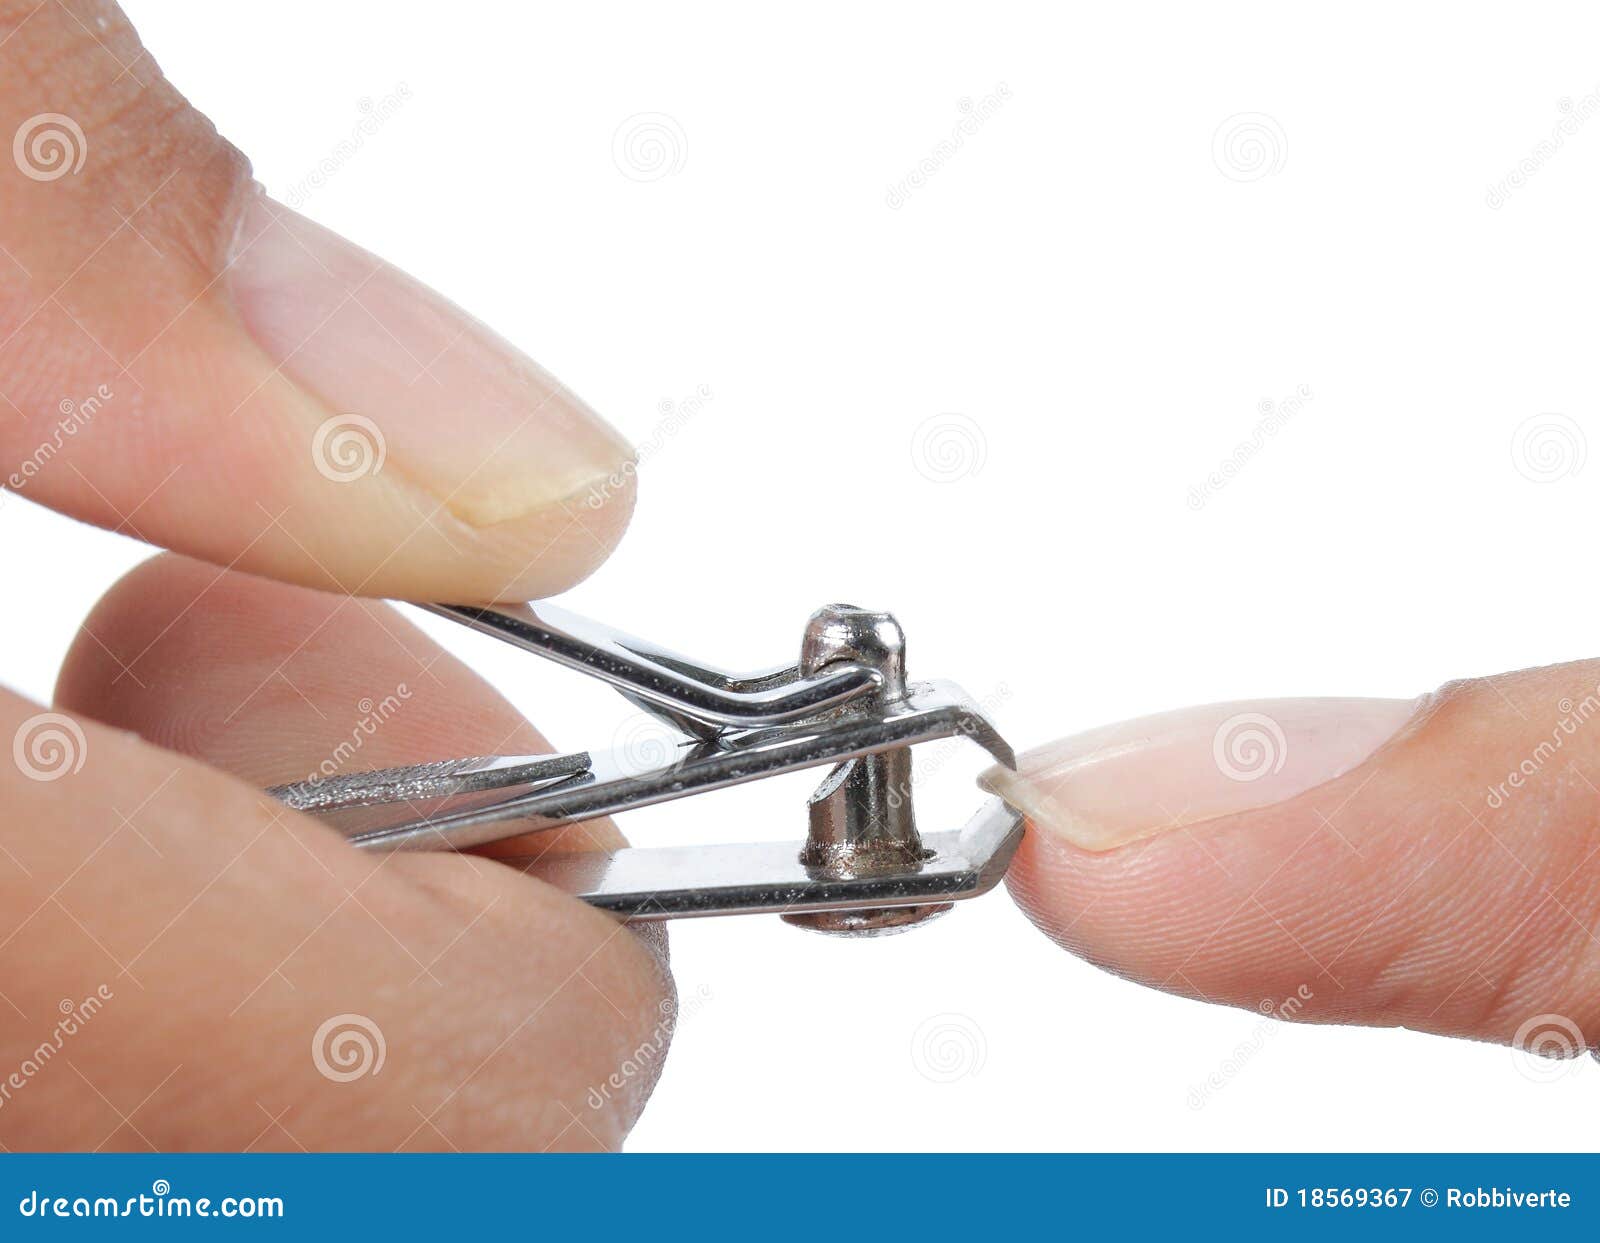 clipart cutting nails - photo #43